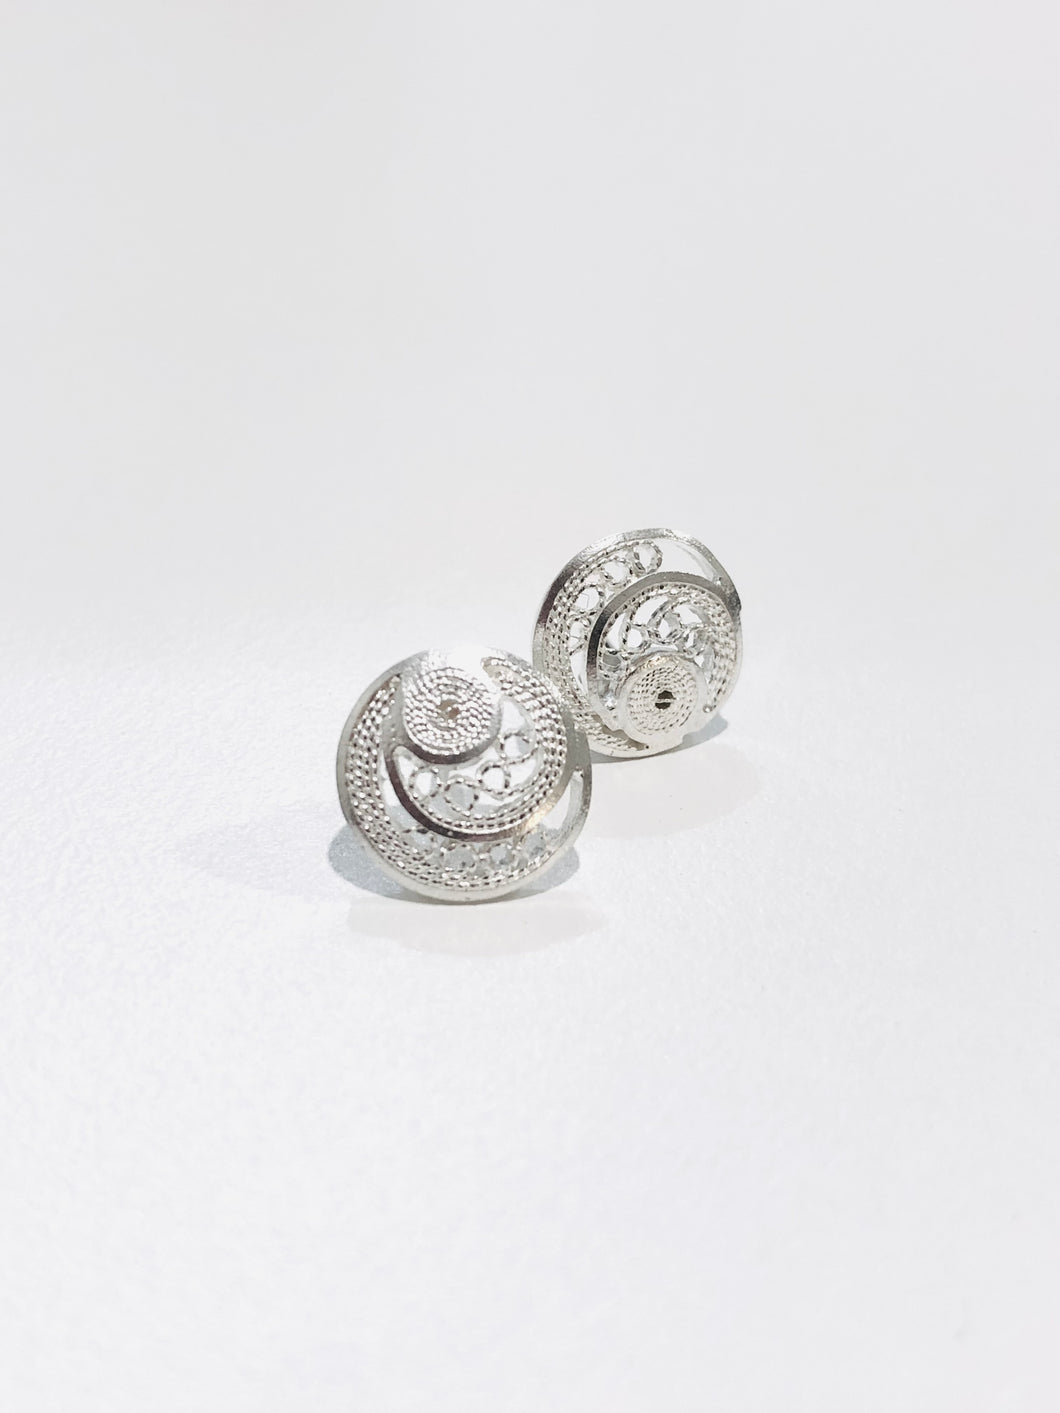 Fossil Shell Sterling Silver Filigree Studs Earrings